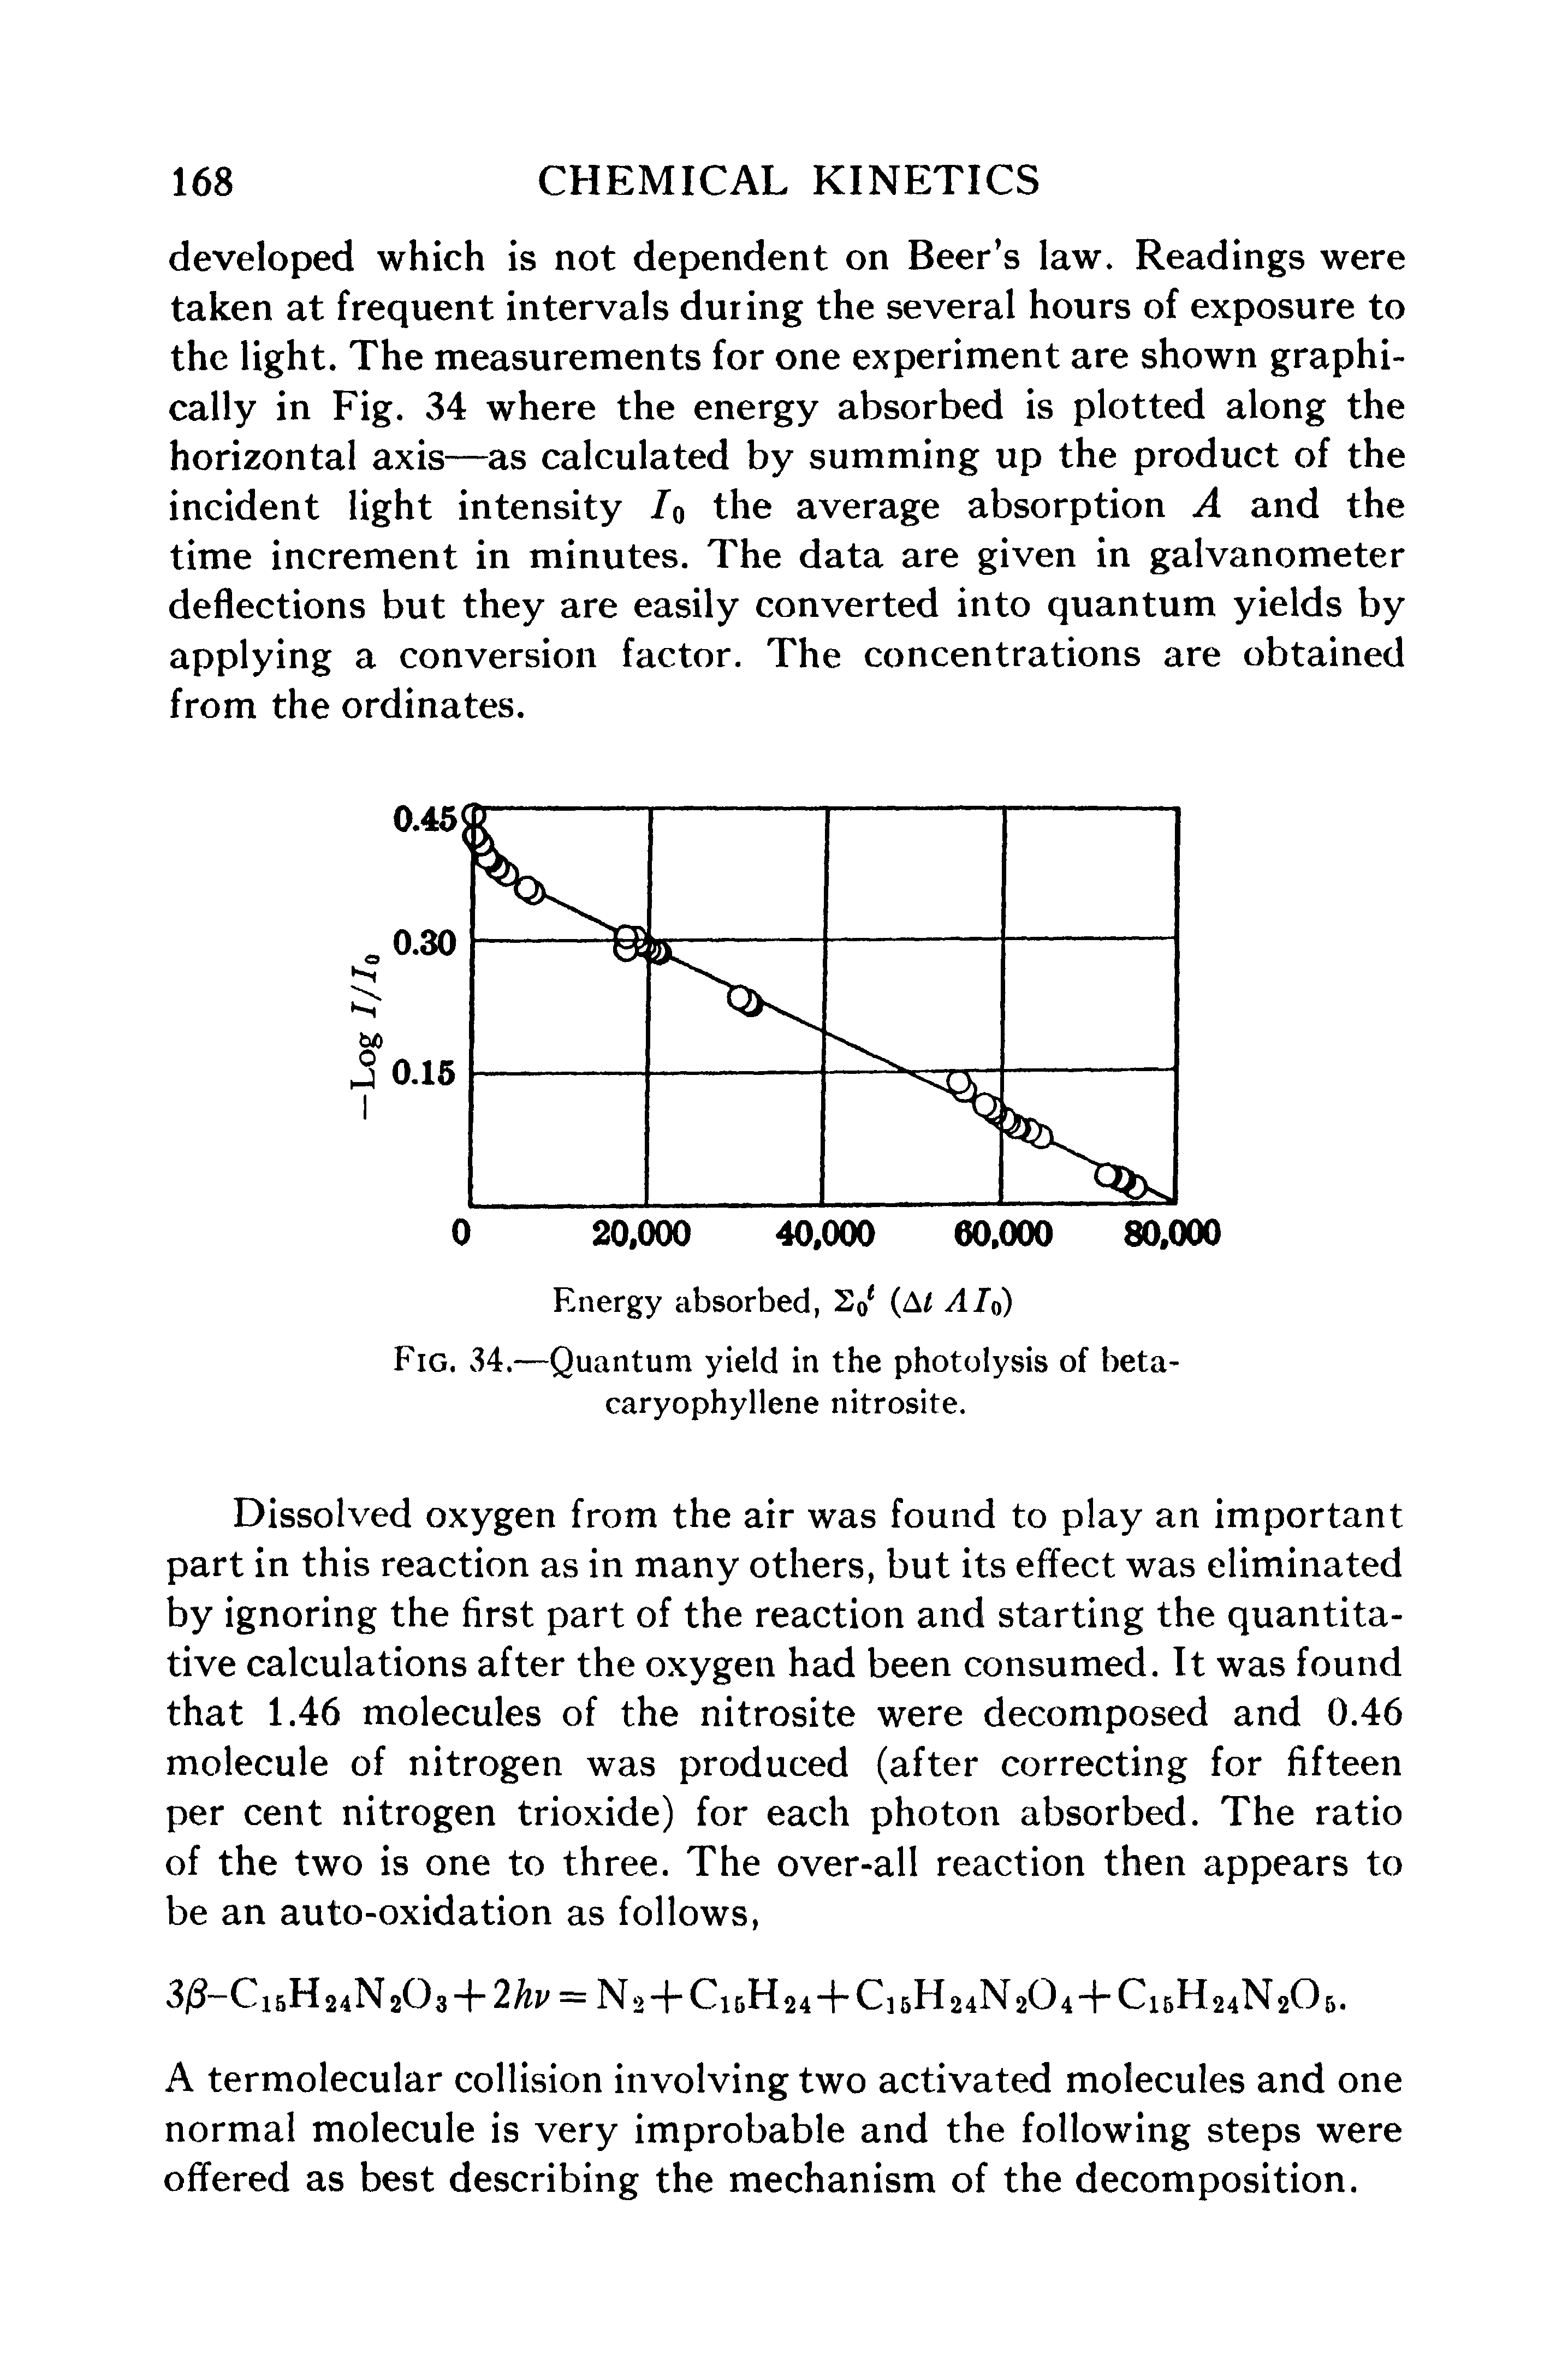 Fig. 34.—Quantum yield in the photolysis of beta-caryophyllene nitrosite.